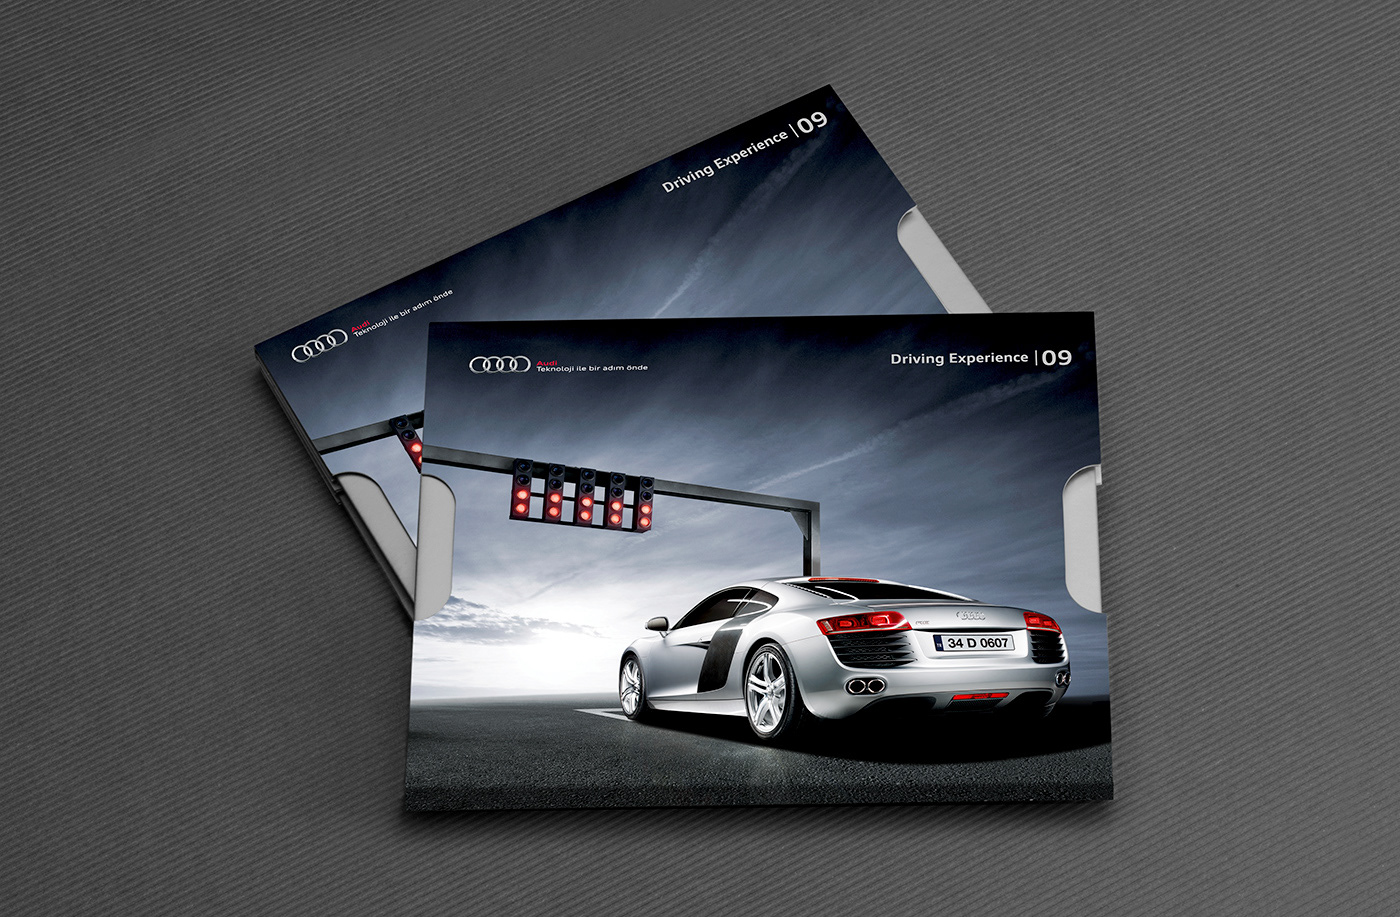 Audi Driving Experience car DDB&Co poster Invitation cd quattro R8